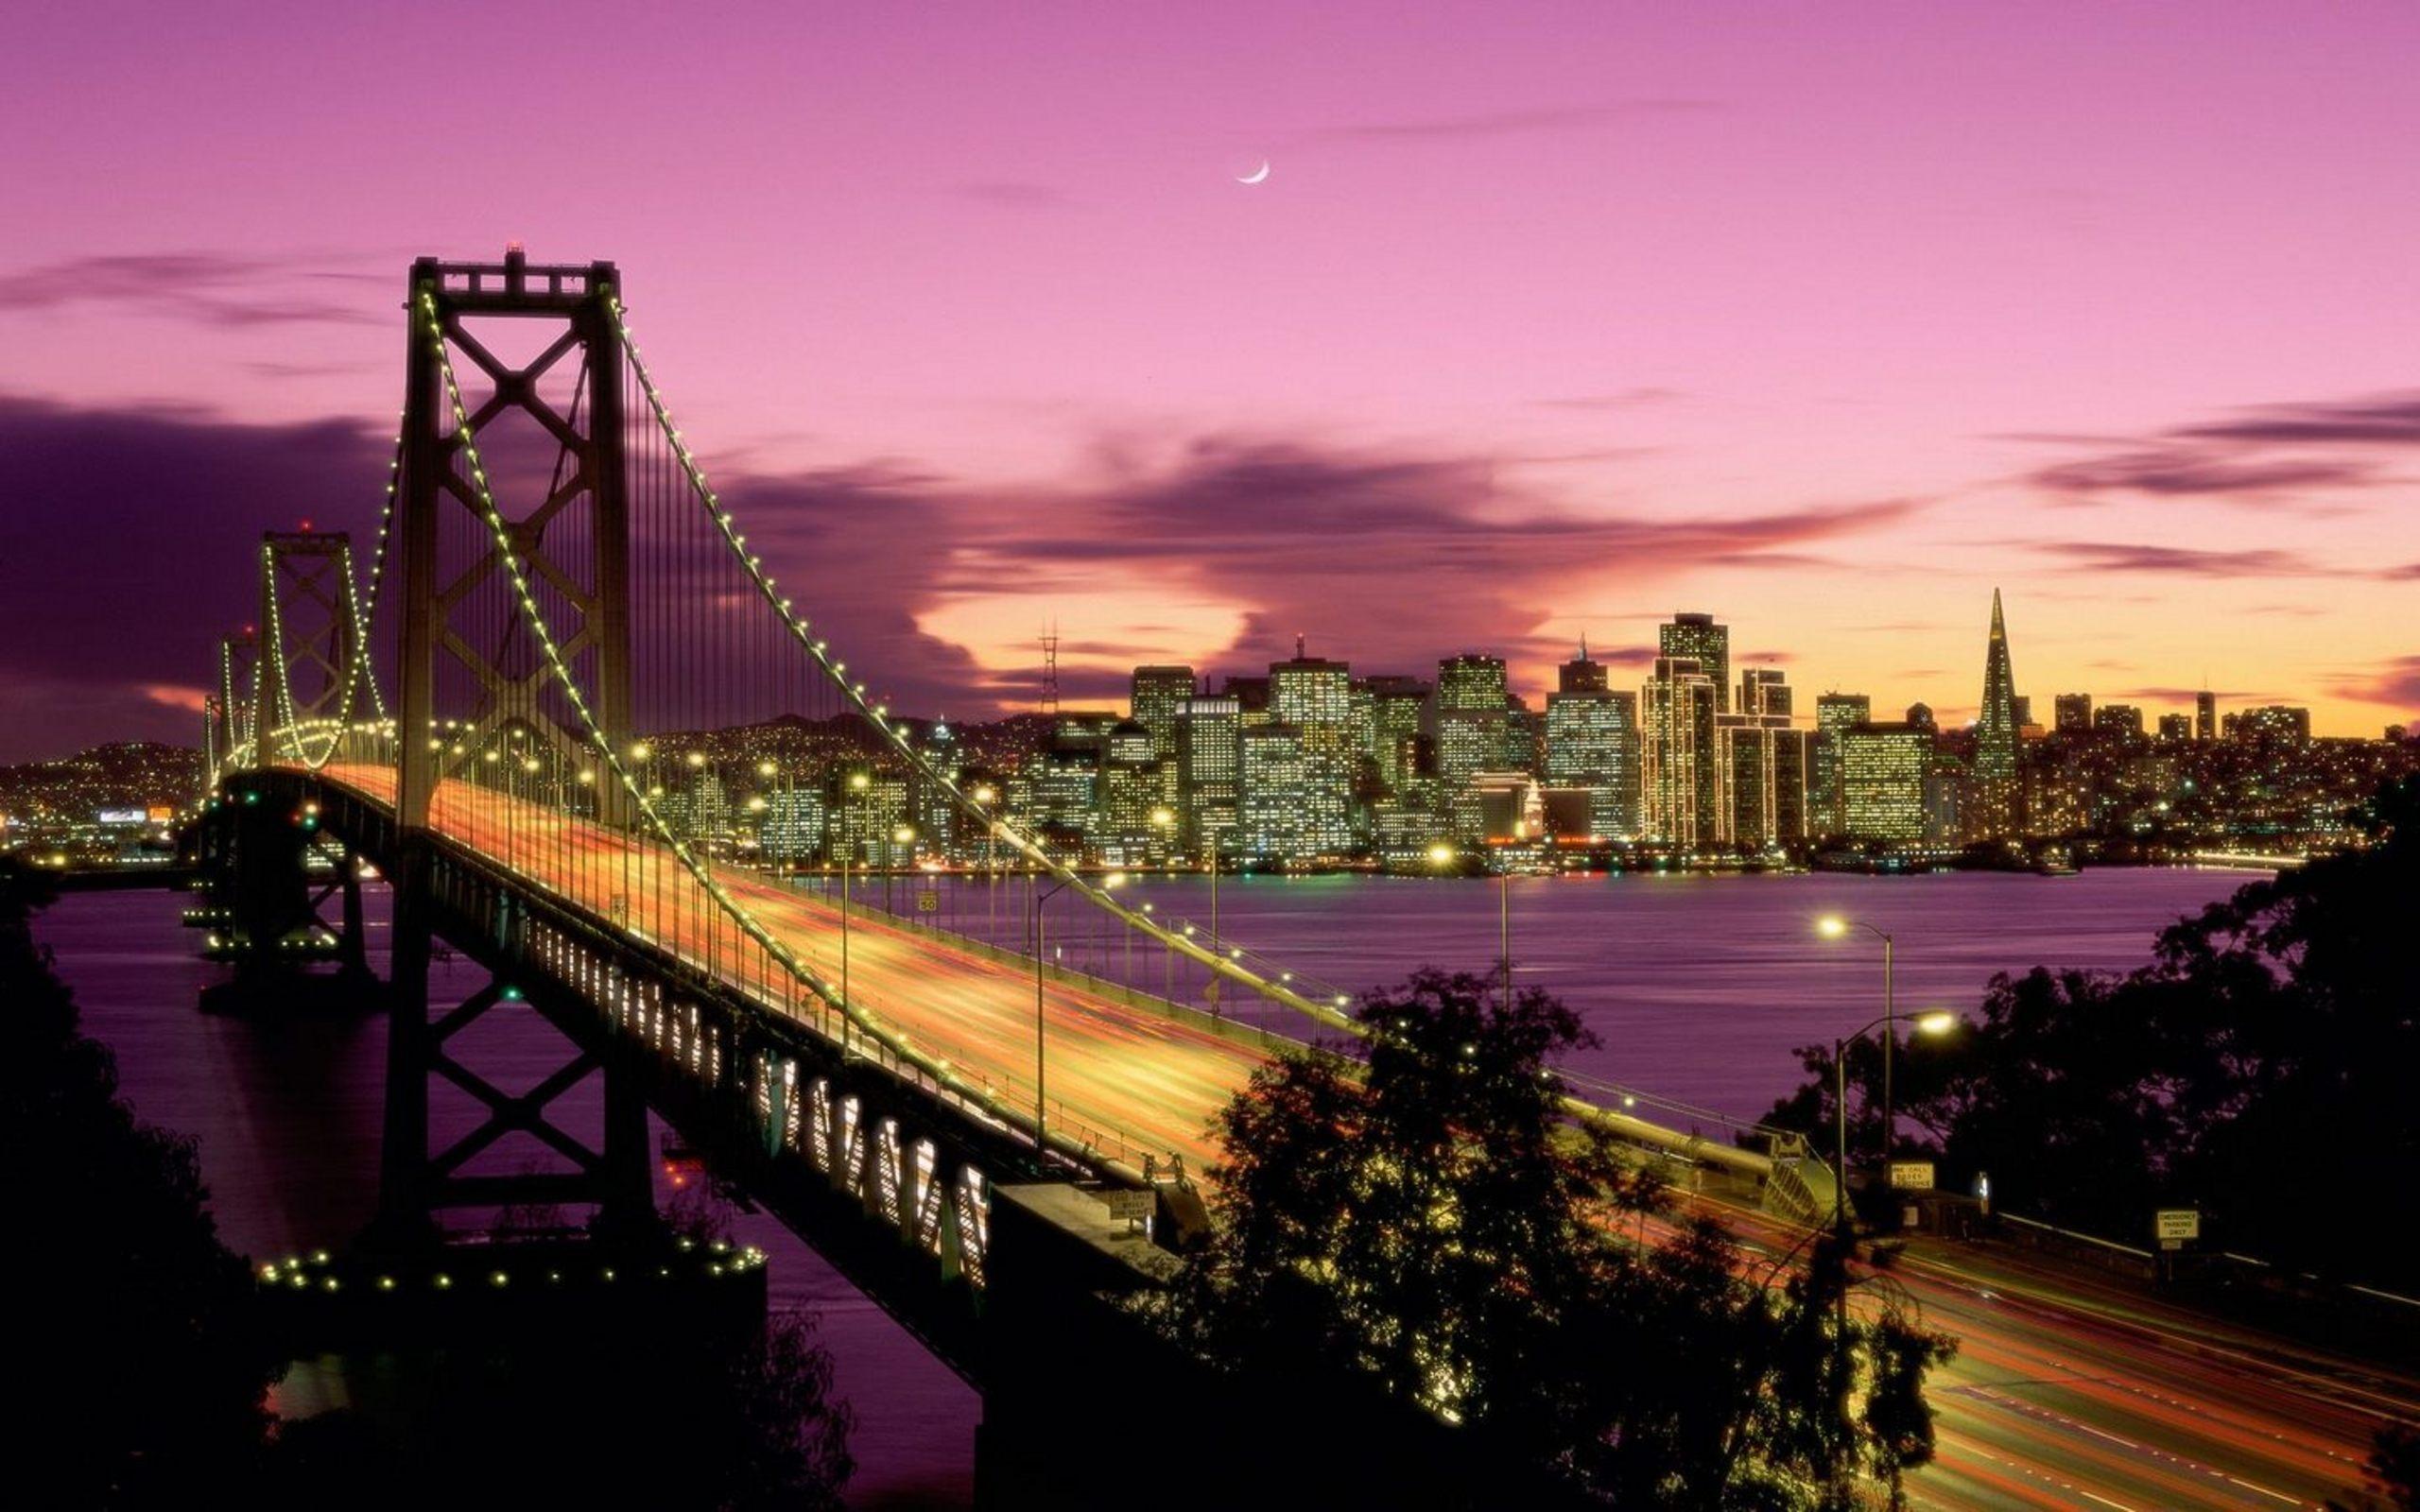 San Francisco Bridge California Wallpaper in jpg format for free